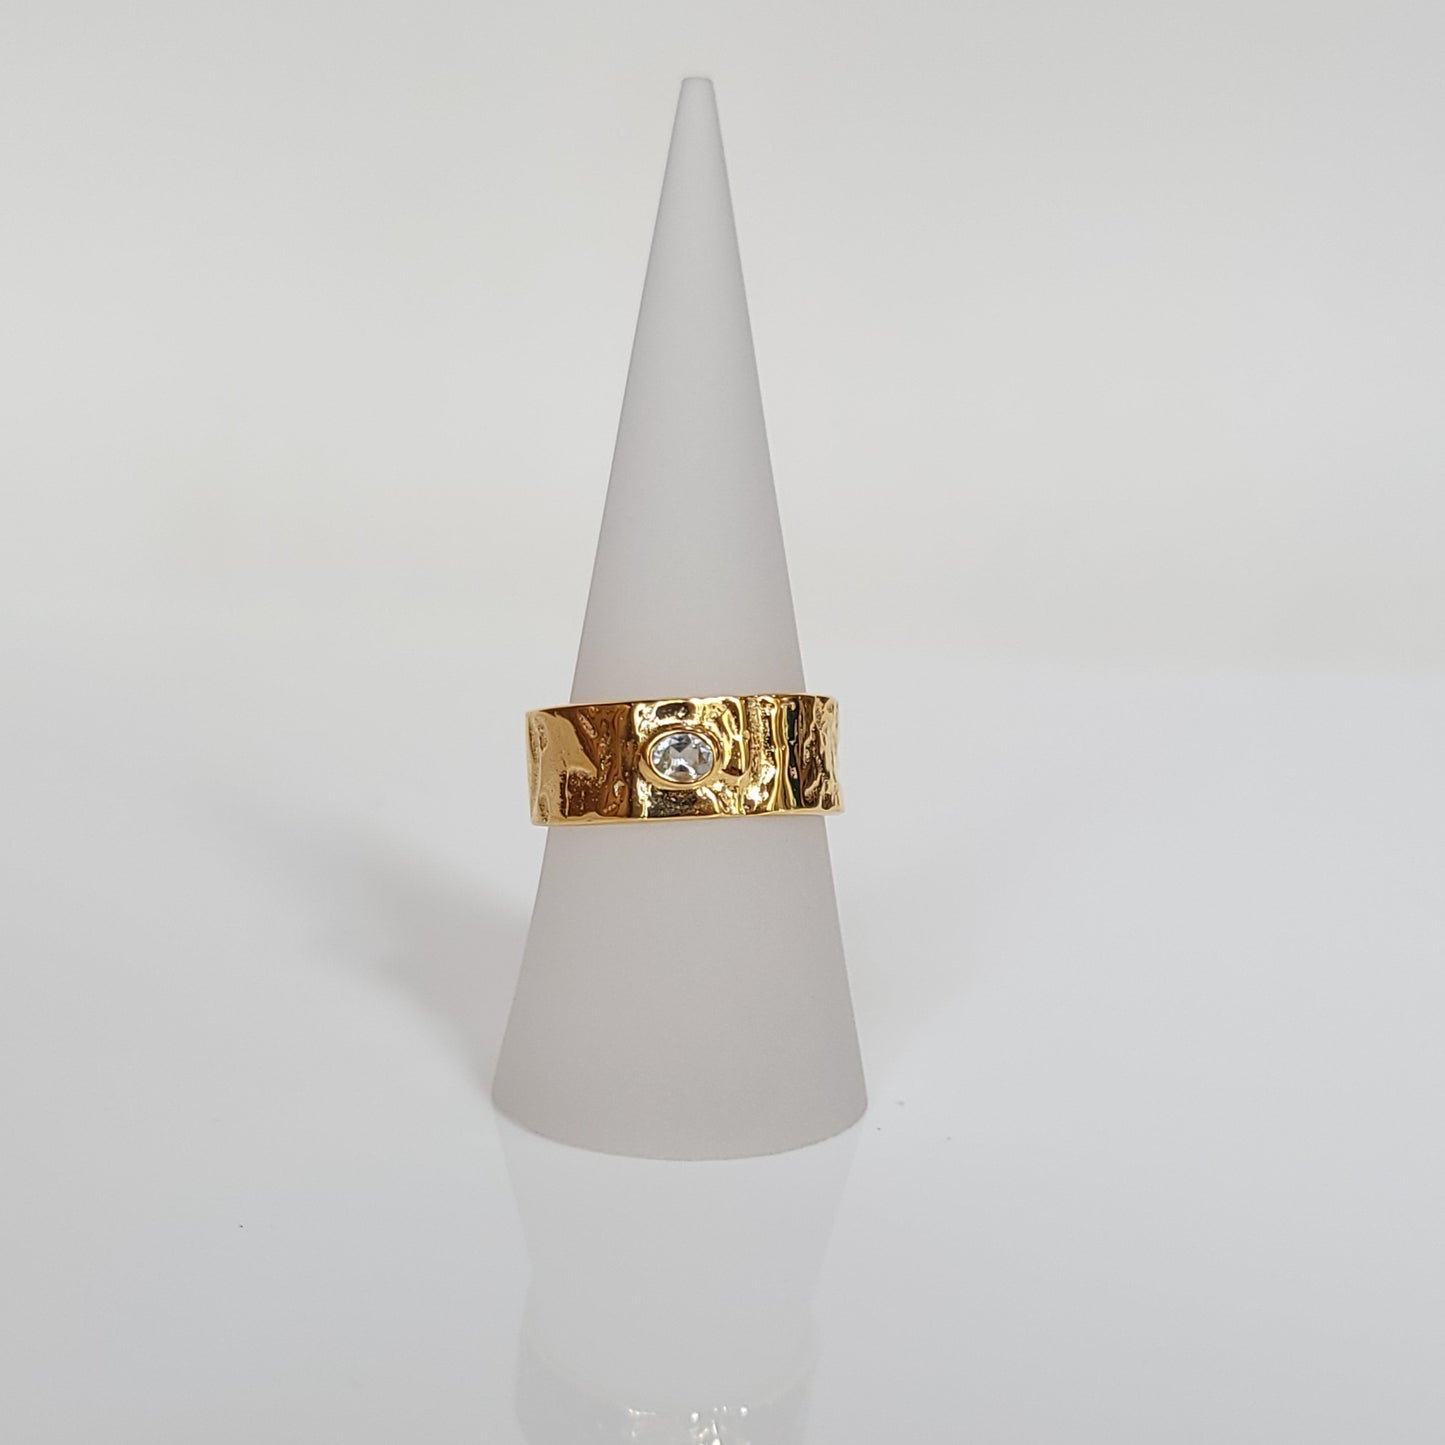 nerissa 18k gold vermeil nature inspired ring for women with natural white topaz gemstone